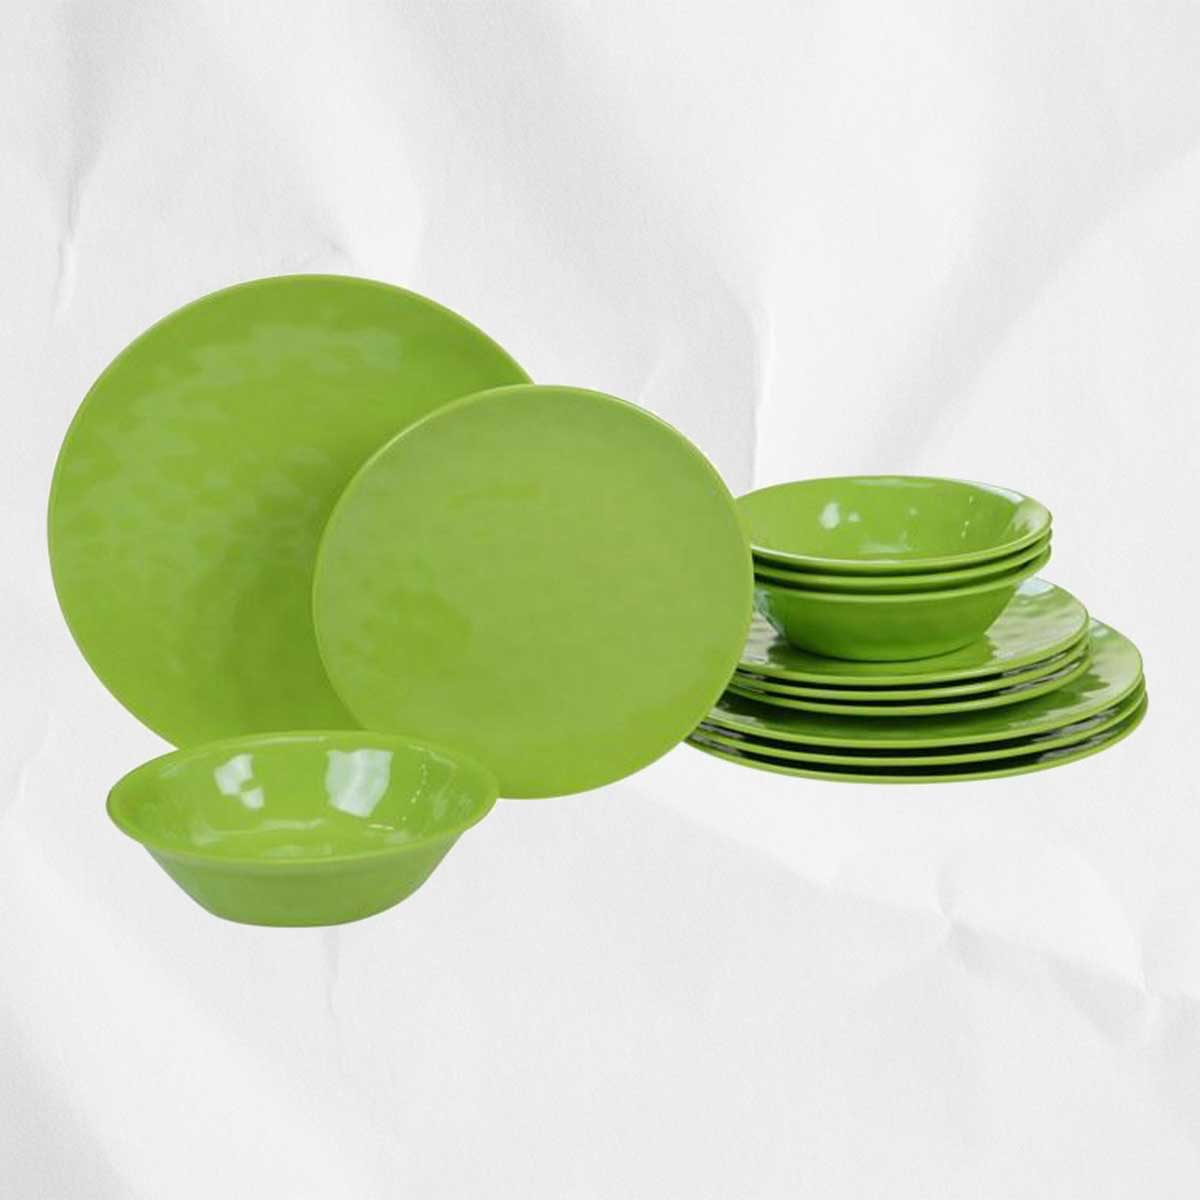 A set of green melamine dinnerware.